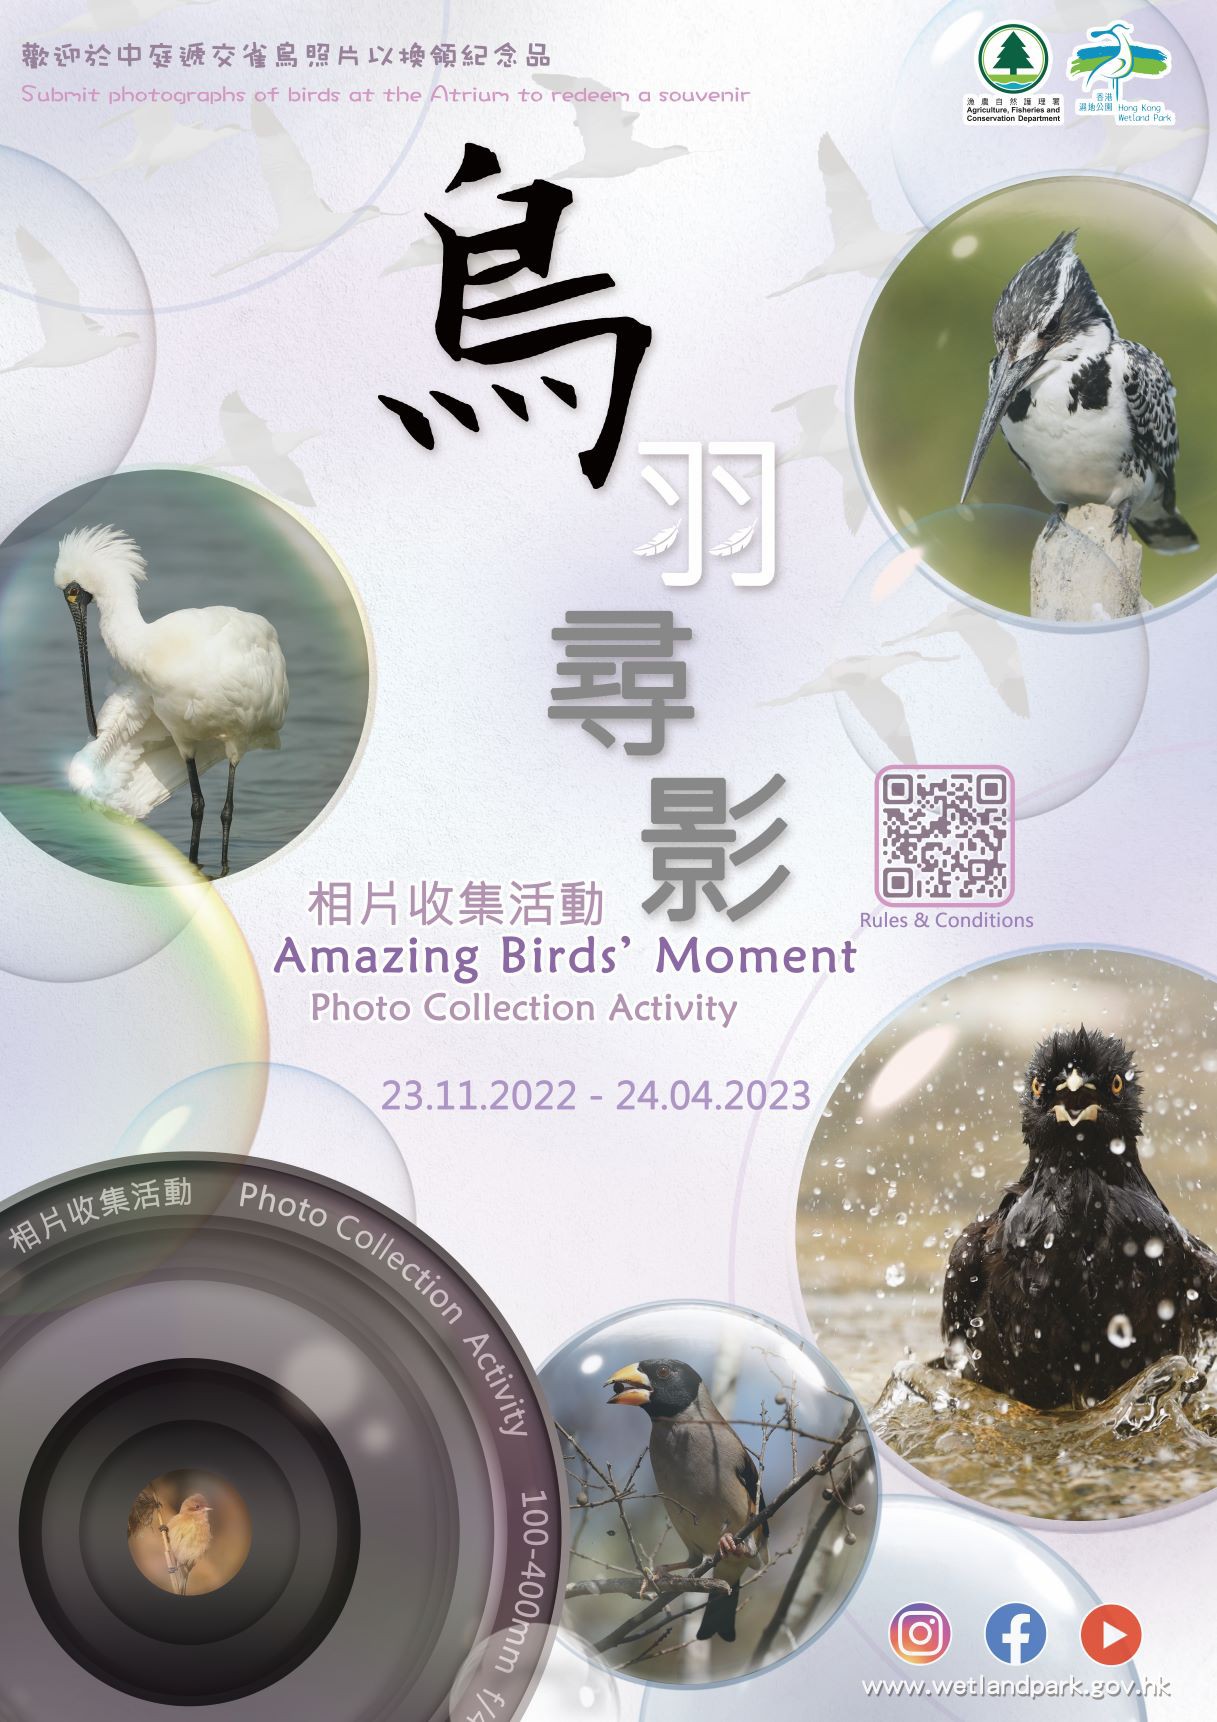 “Amazing Birds’ Moment” Photo Collection Activity